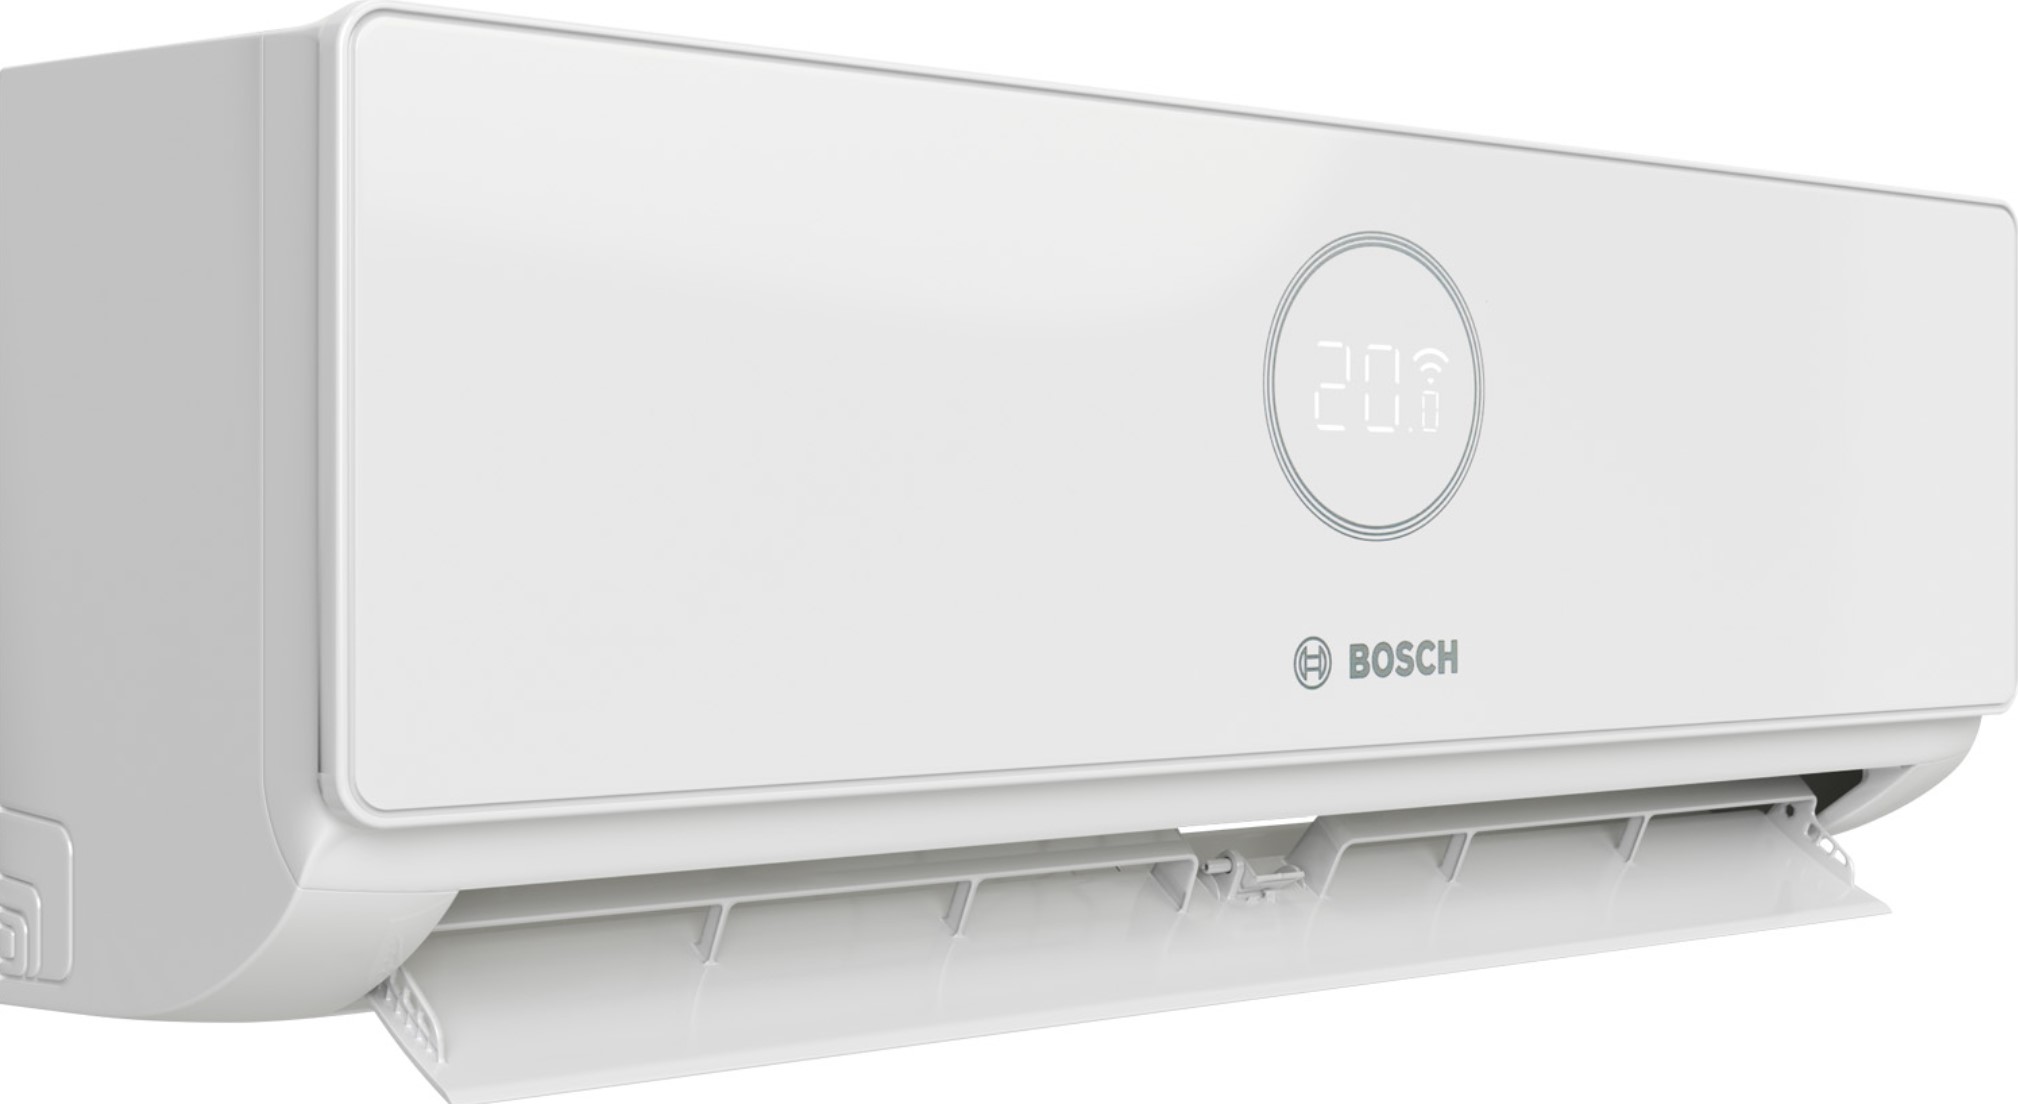 Кондиционер сплит-система Bosch Climate CL3000i 53 E характеристики - фотография 7